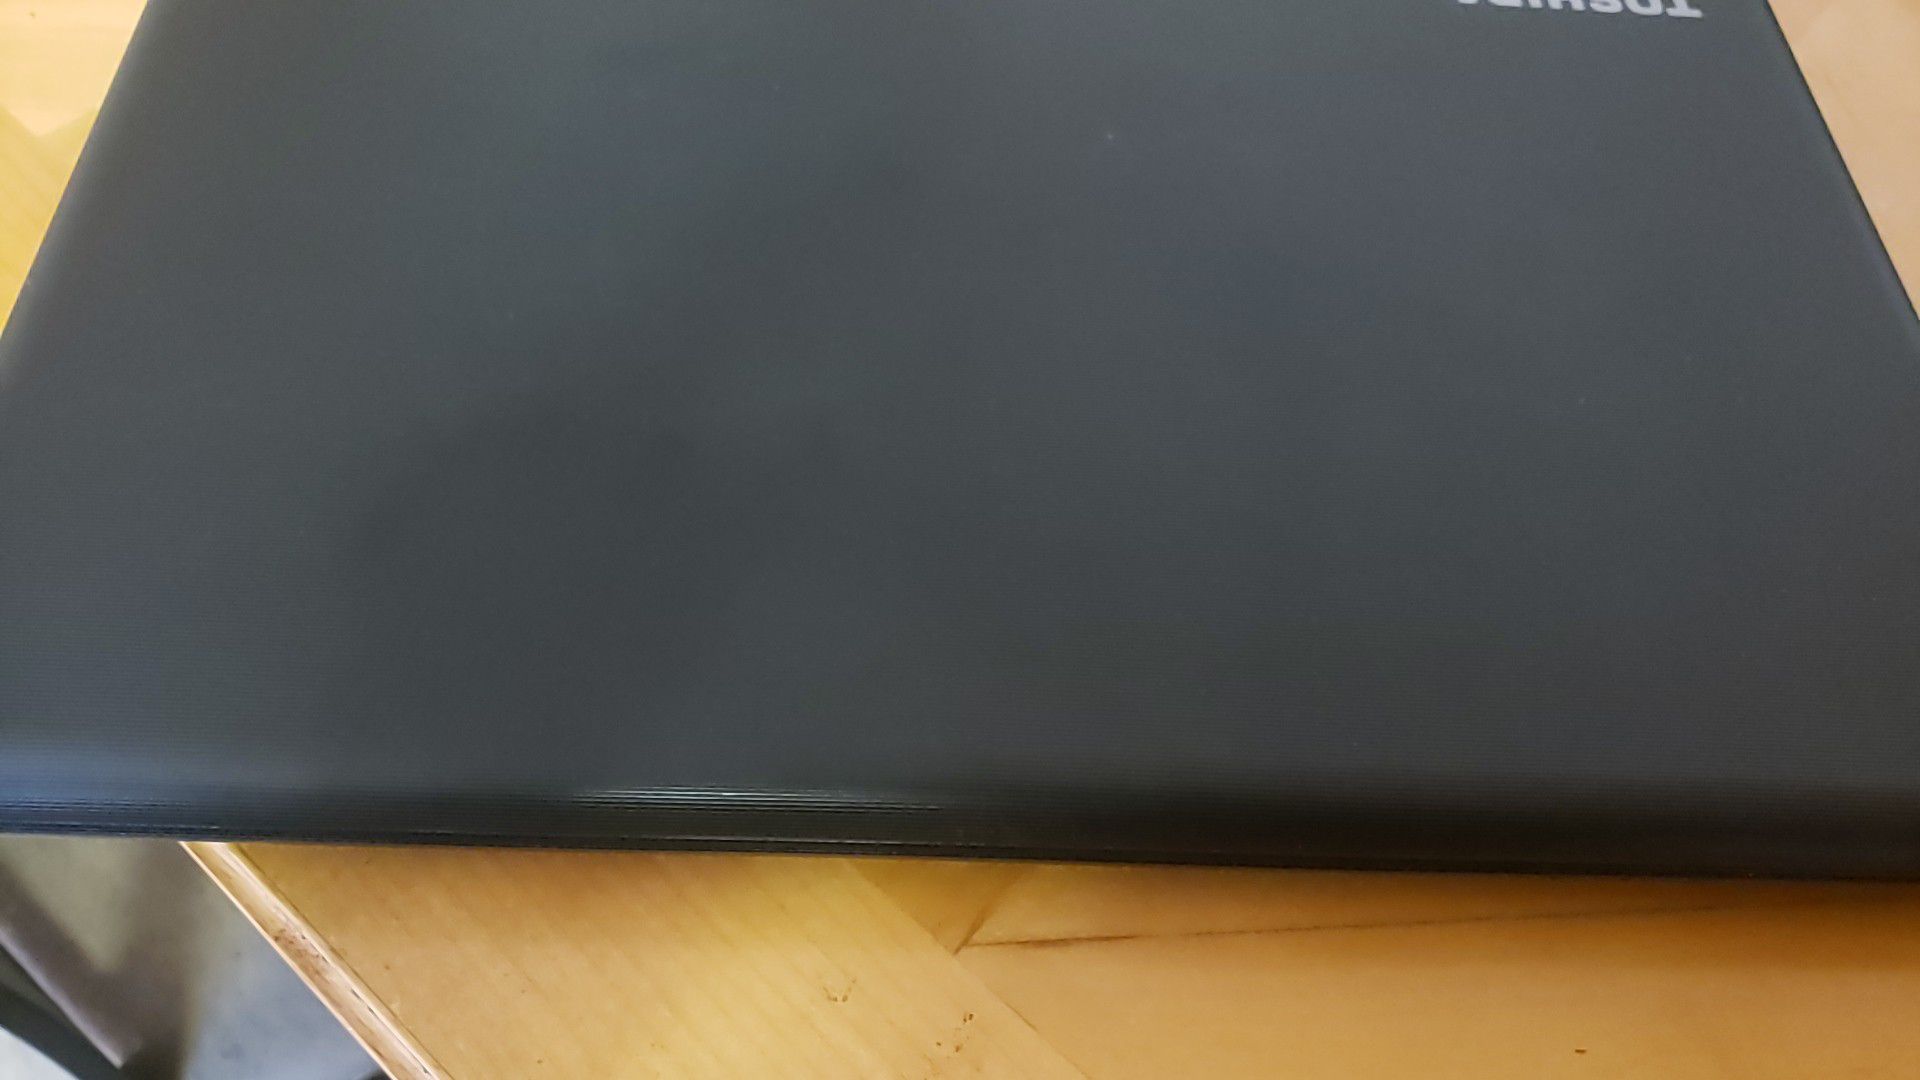 Toshiba Windows 8 Laptop